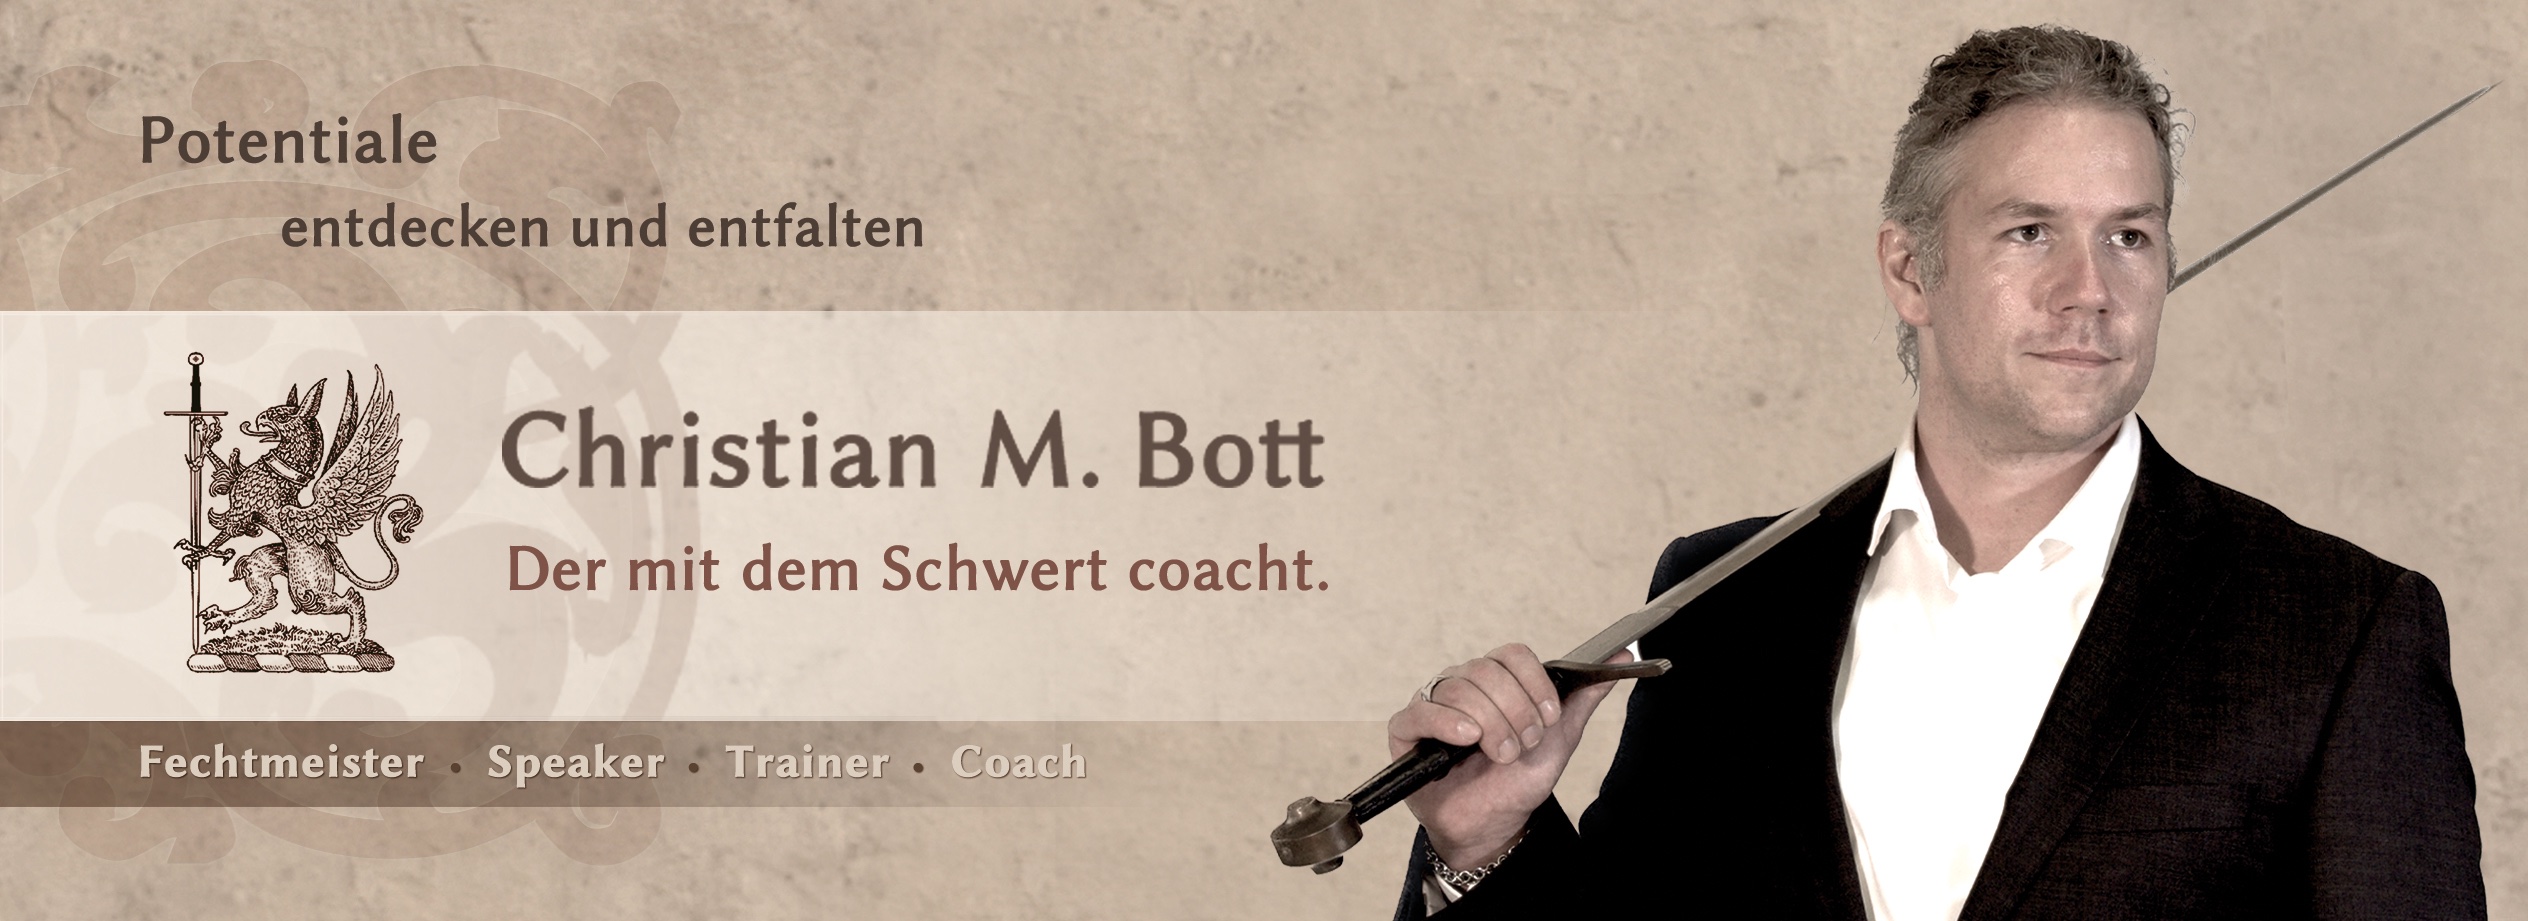 Christian M. Bott - Der mit dem Schwert coacht.